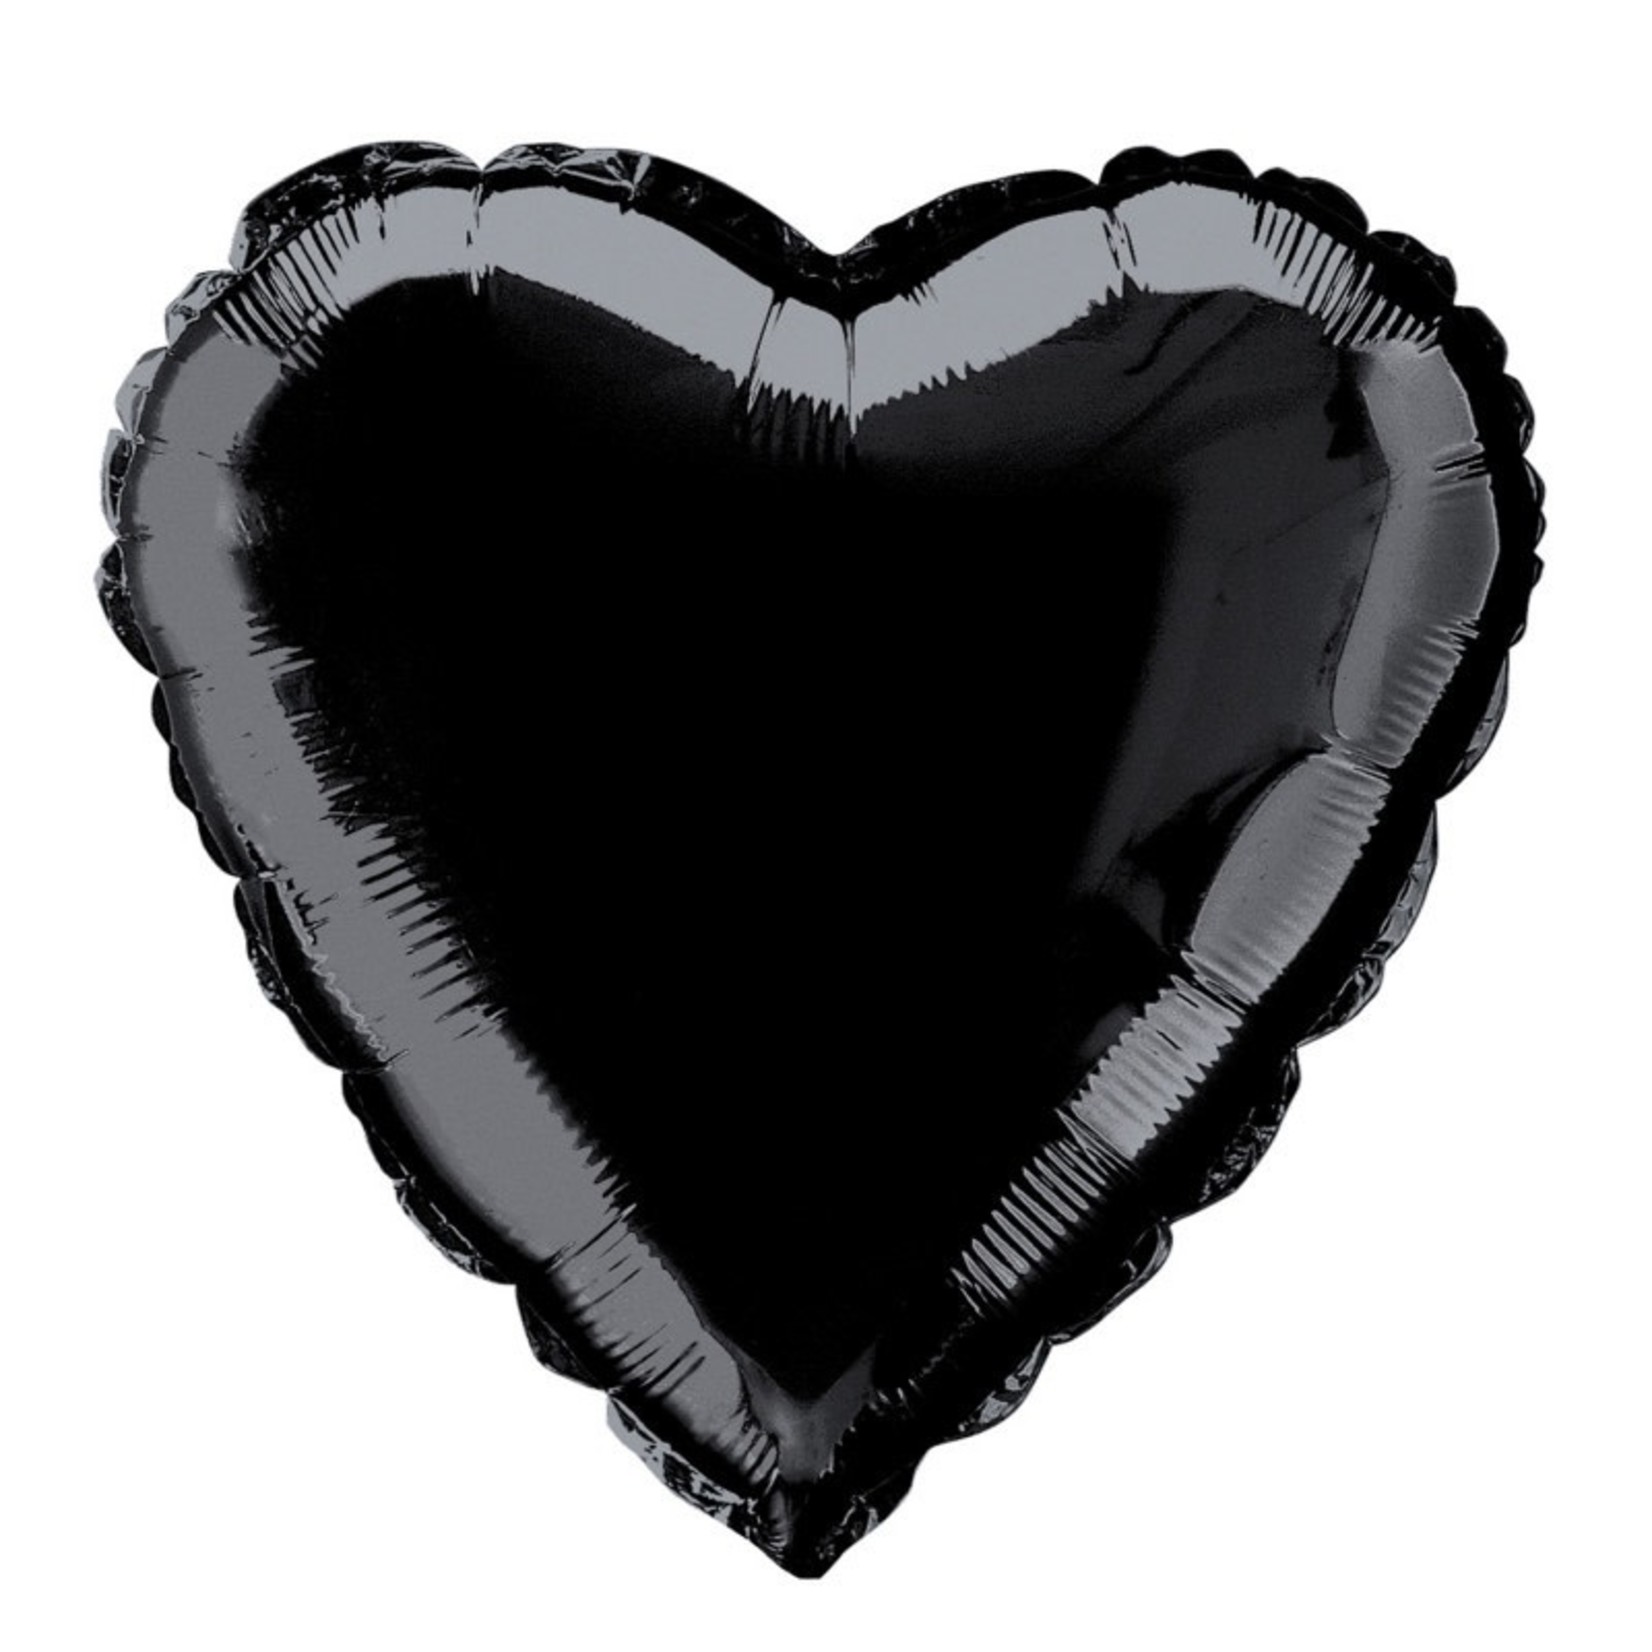 18'' Black Heart Foil Balloon